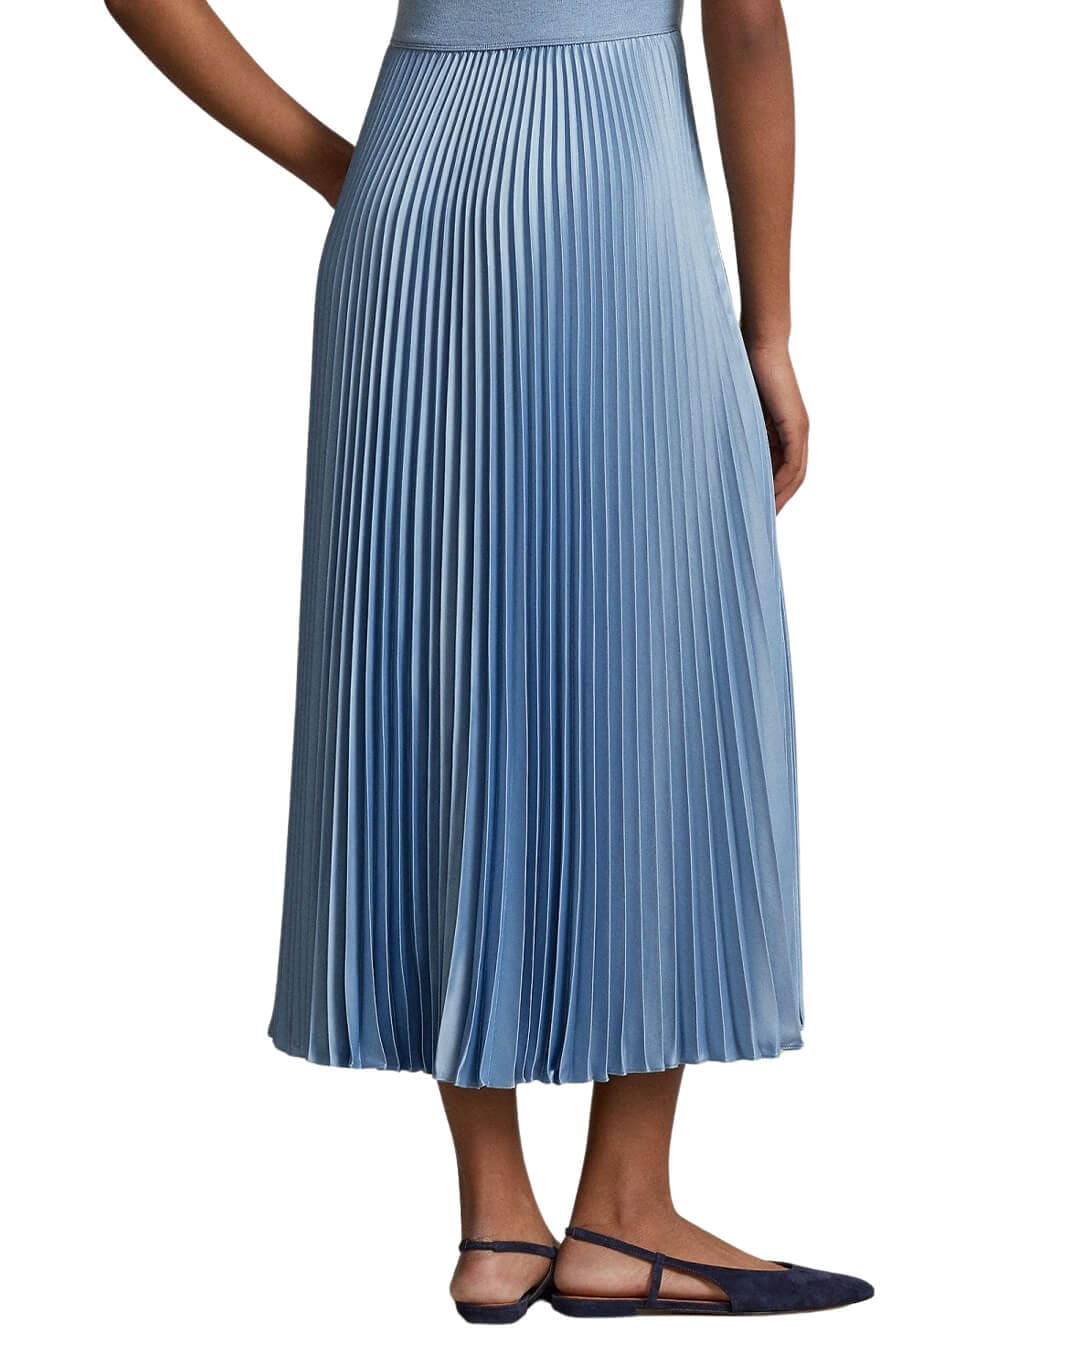 Lauren By Ralph Lauren Dresses Lauren By Ralph Lauren Blue Hybrid Sweater-Pleated Midi Dress